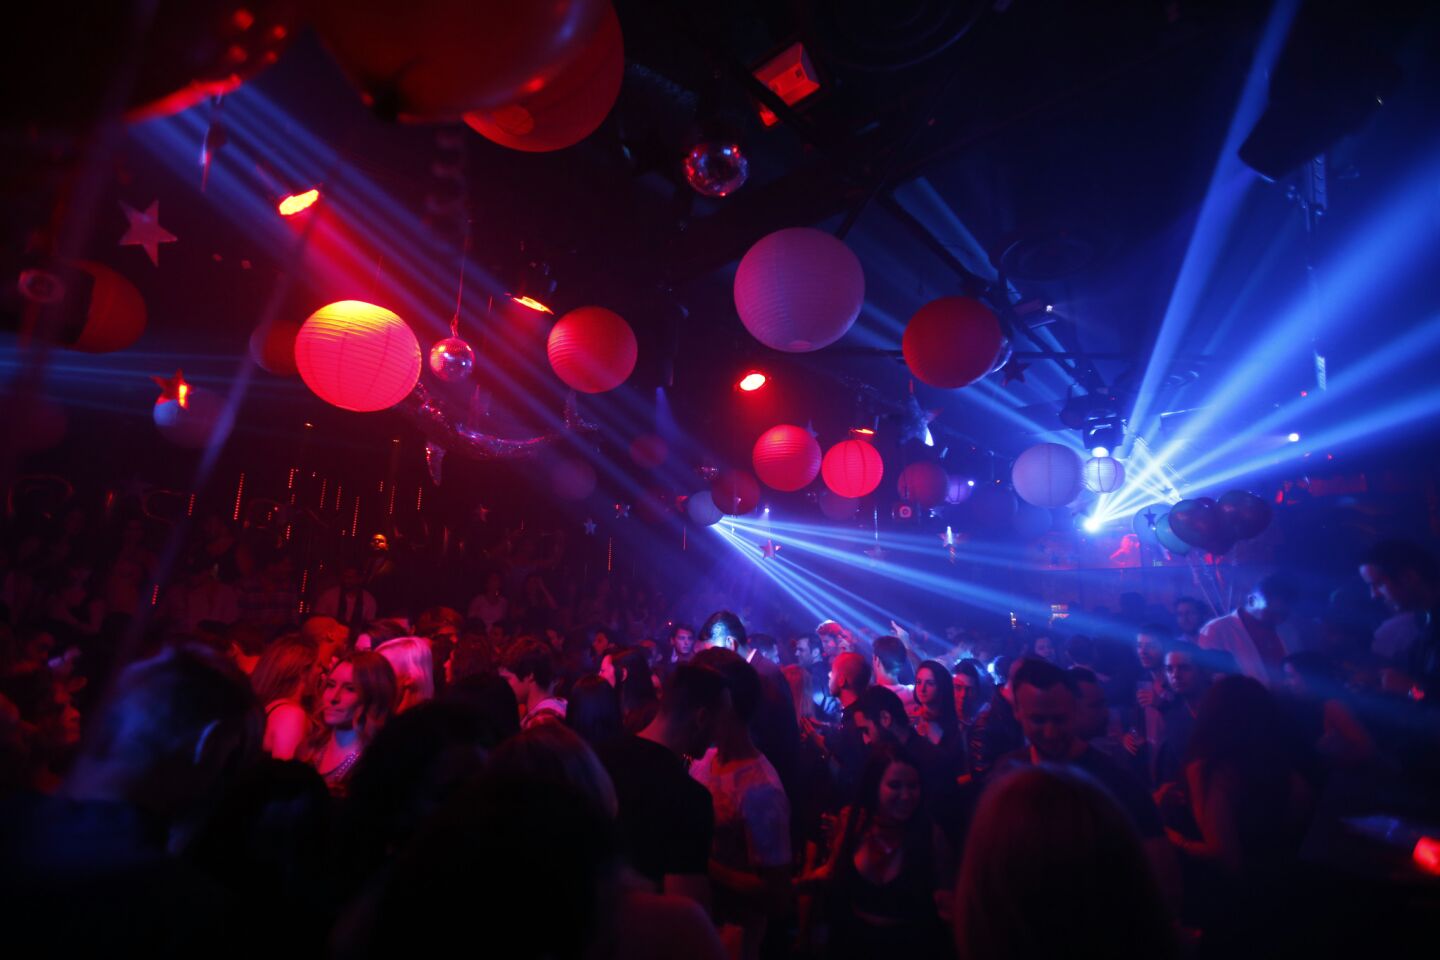 Photos: The scene at Sound Nightclub - Los Angeles Times